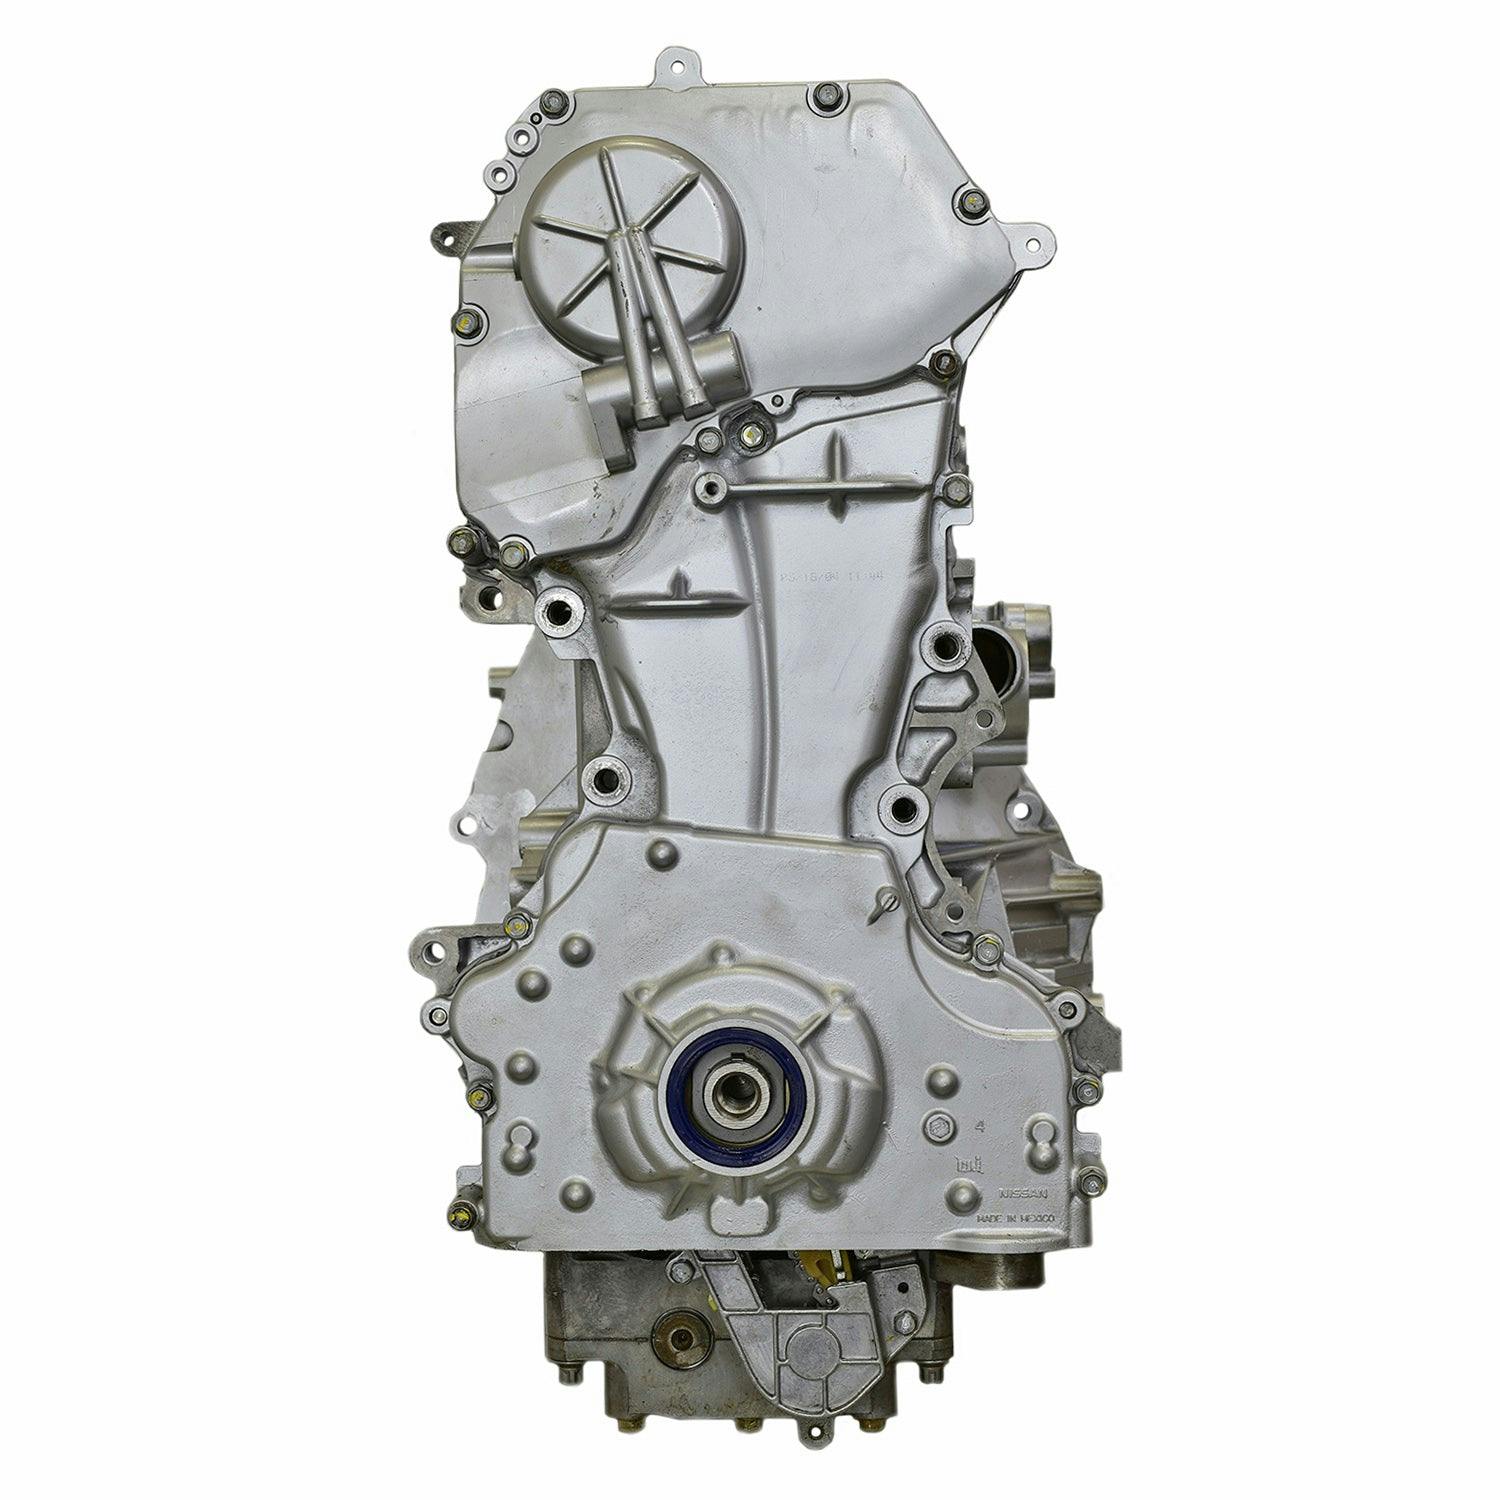 2.5L Inline-4 Engine for 2005-2006 Nissan X-Trail 4WD/AWD